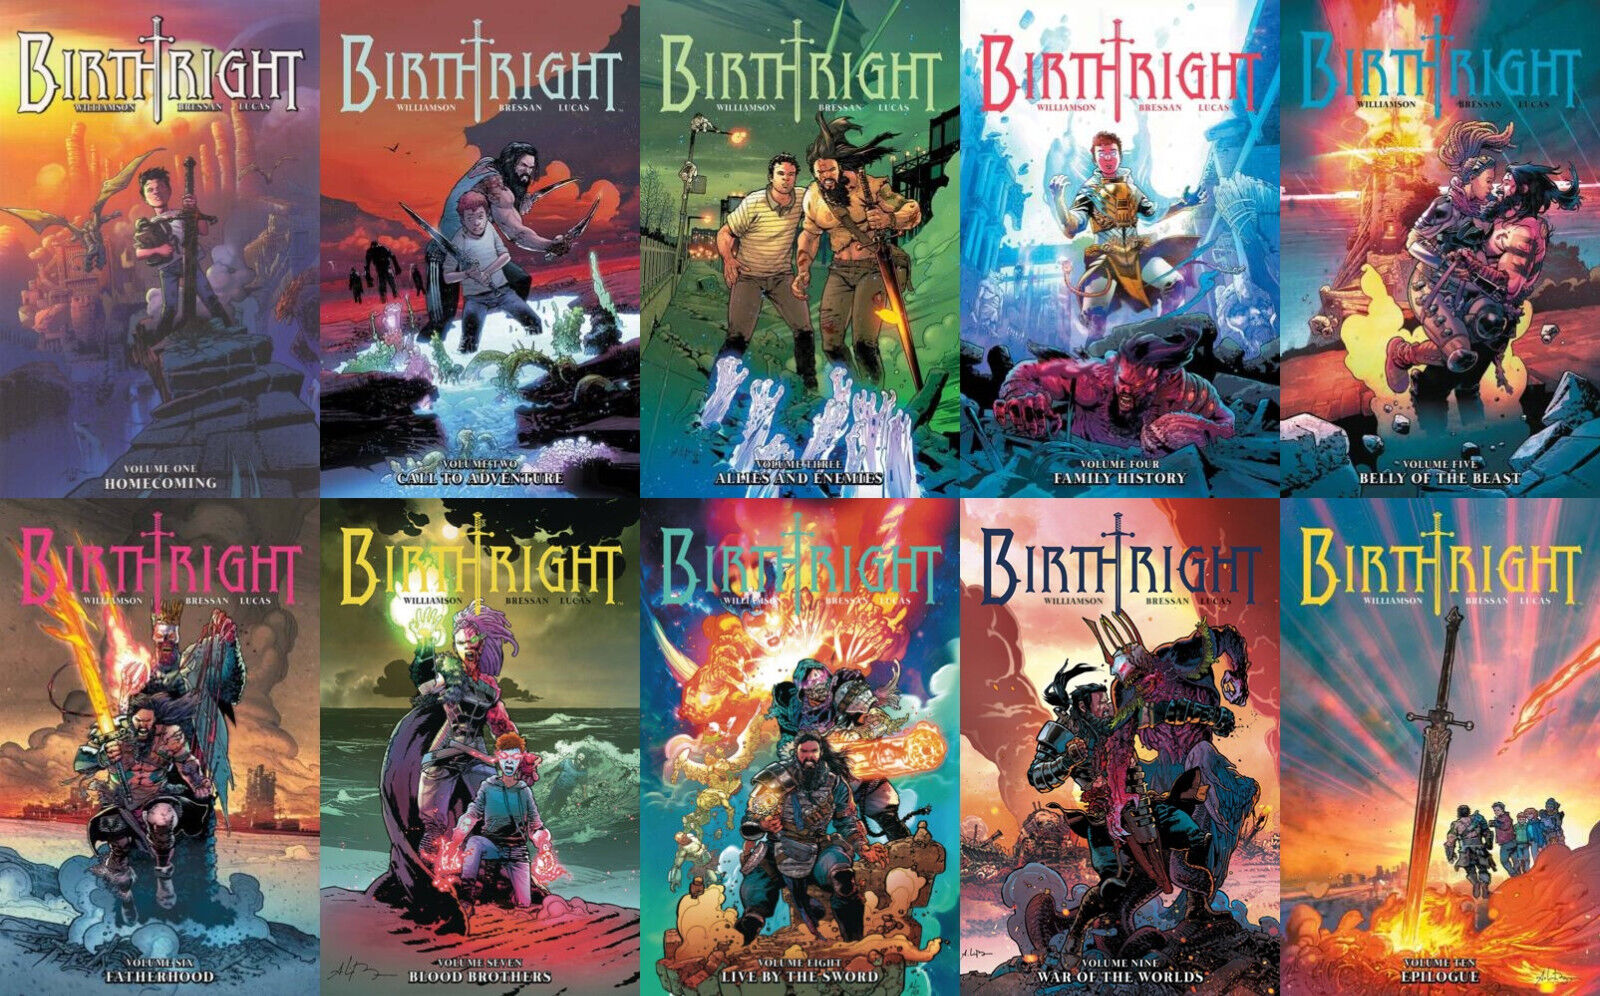 Birthright Vol 1-10 Softcover TPB Graphic Novel Set